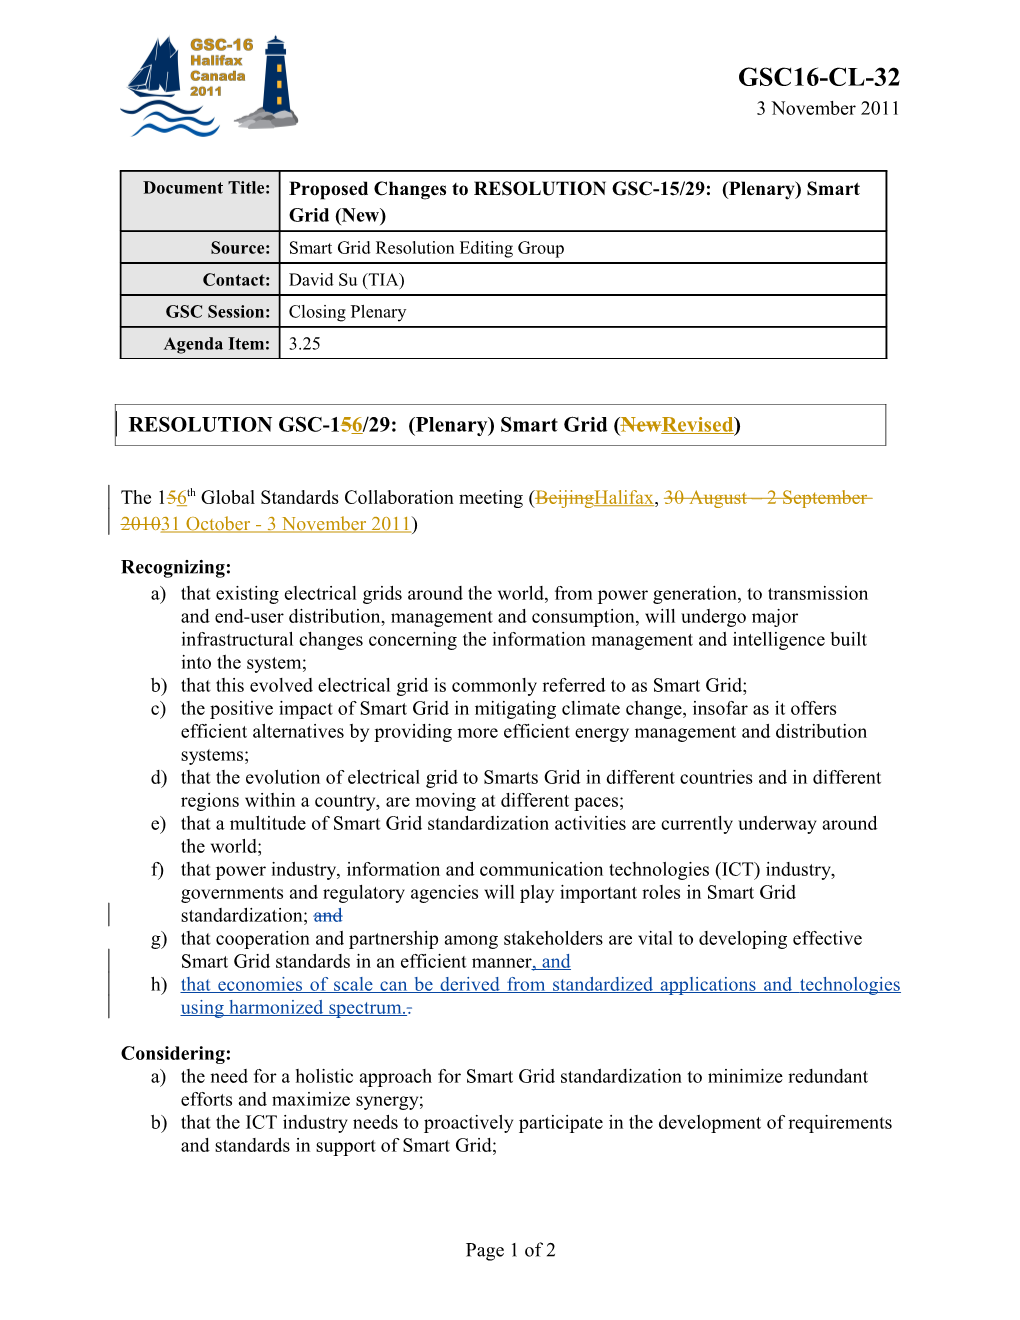 Draft Resolution GSC-16/29: (Plenary) Smart Grid (Revised)